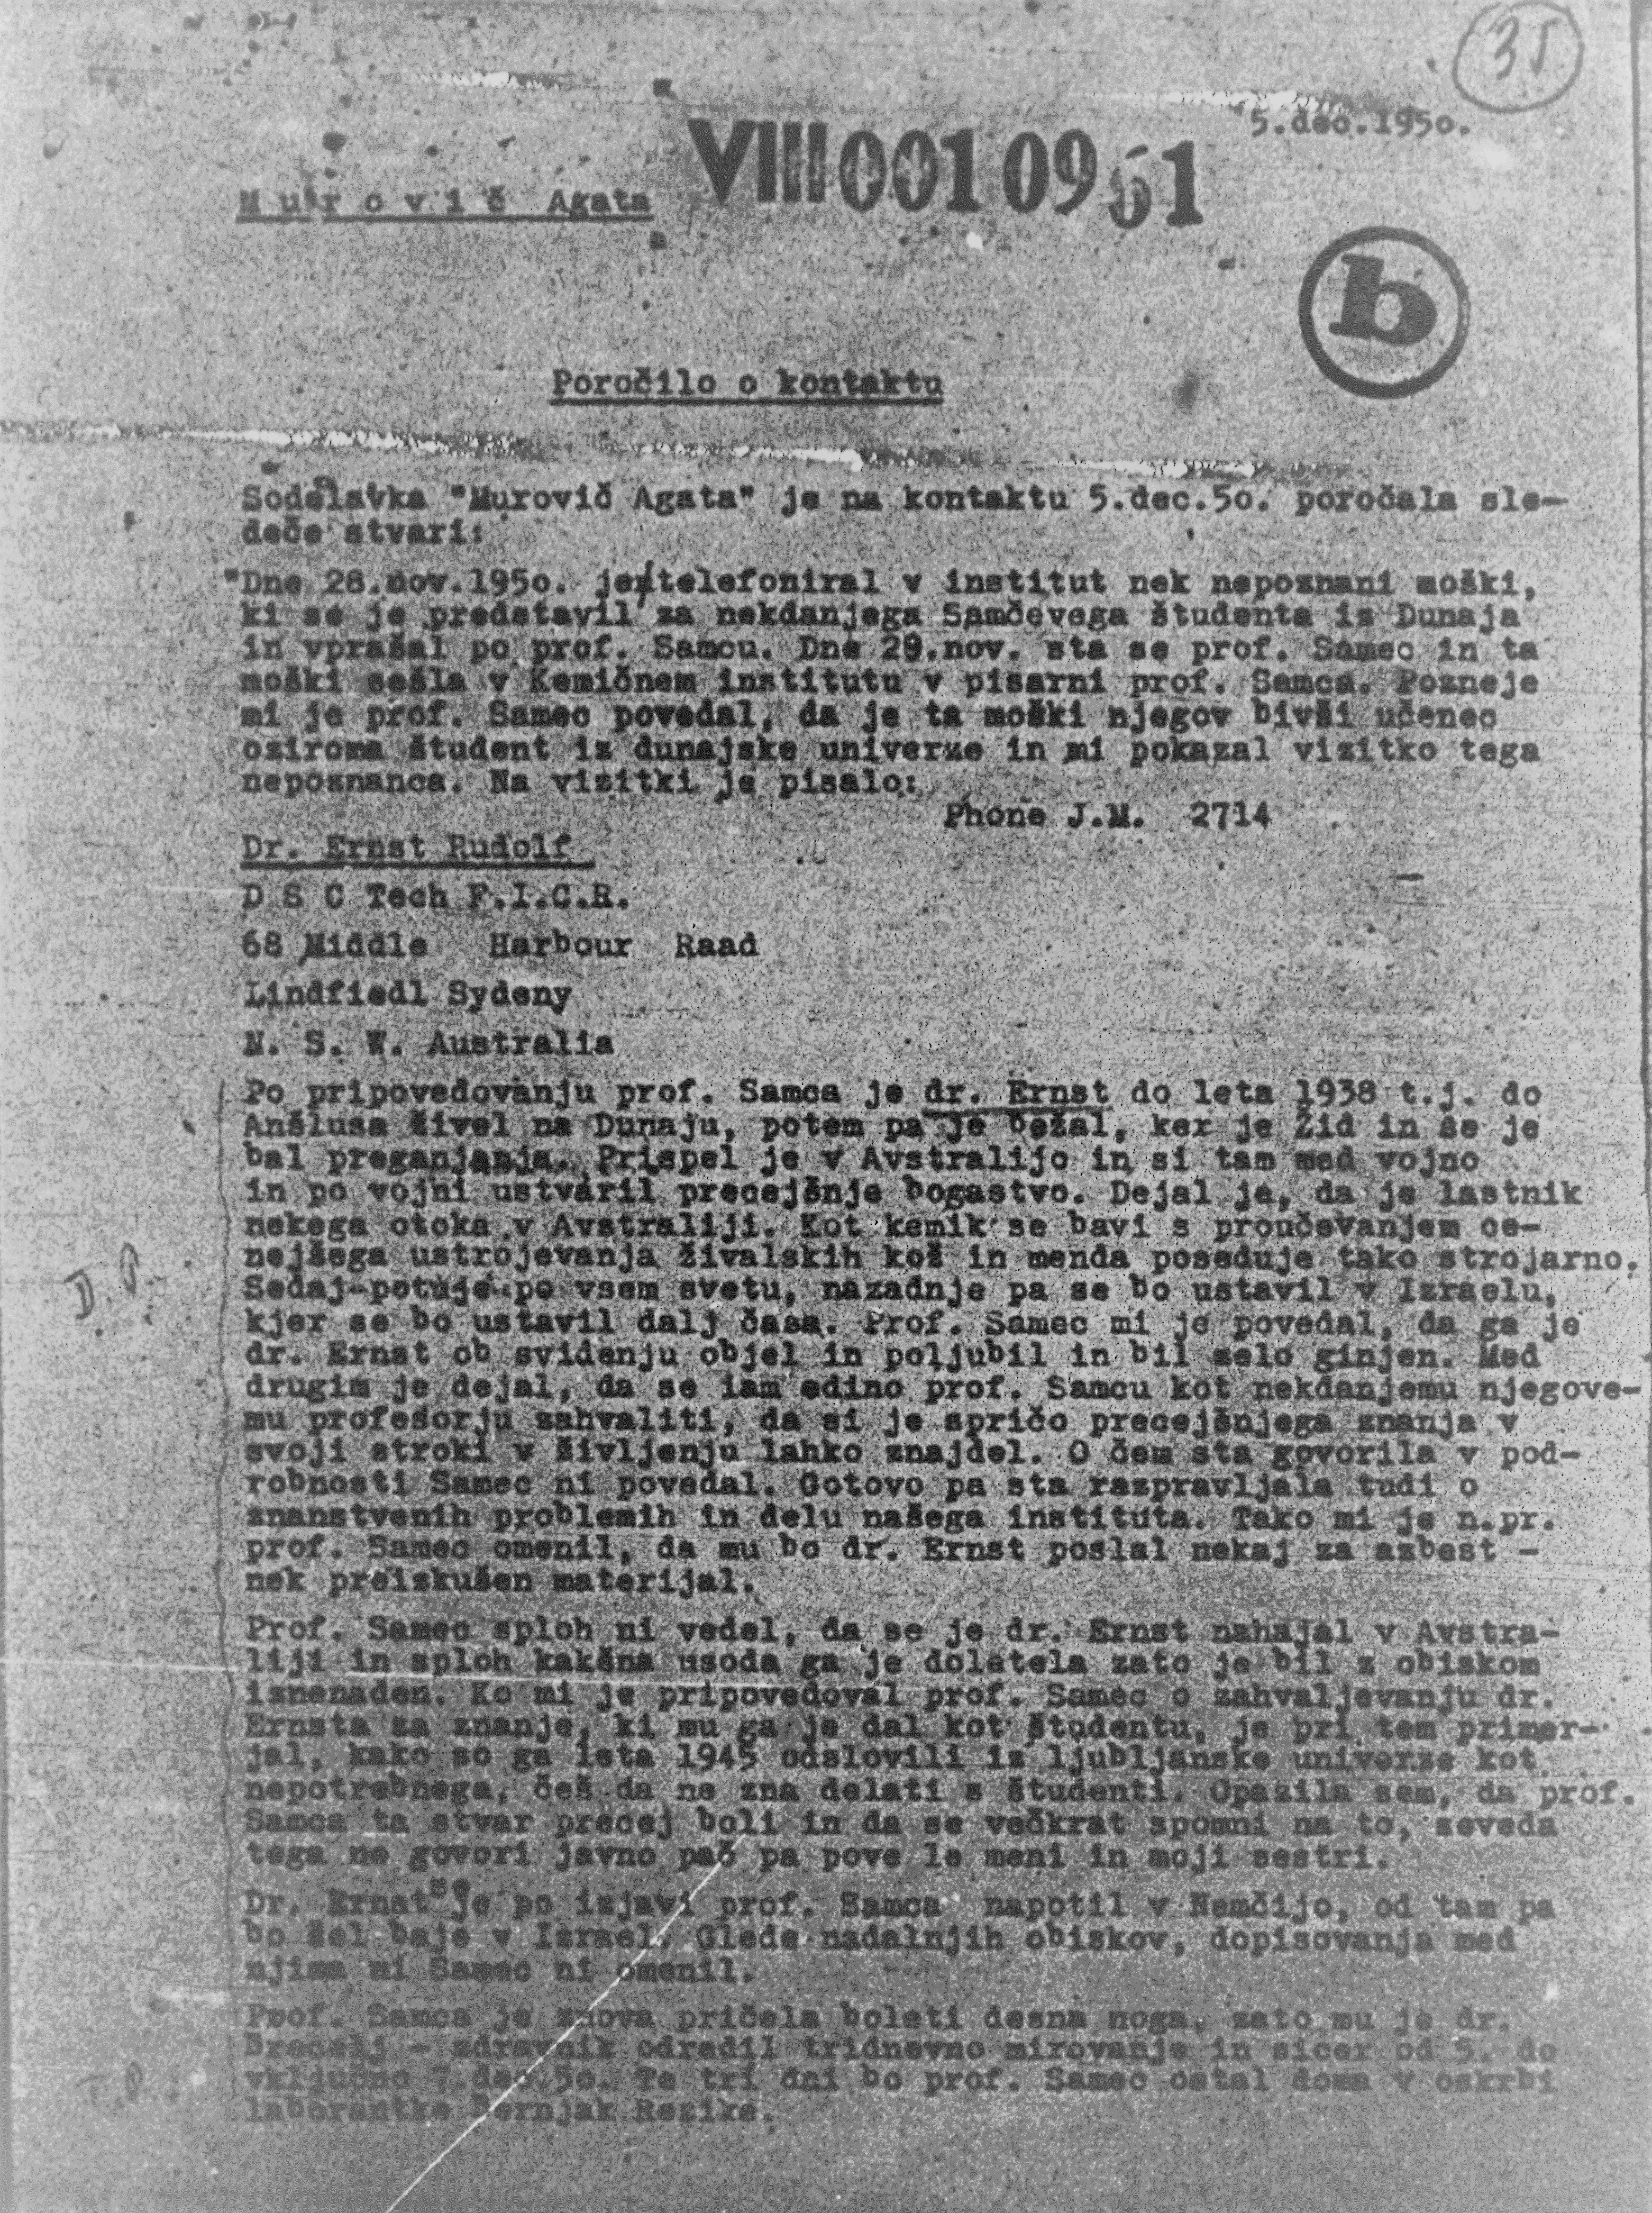 Report of UDBAs Associate Agata Murovič, 1950. Manuscript